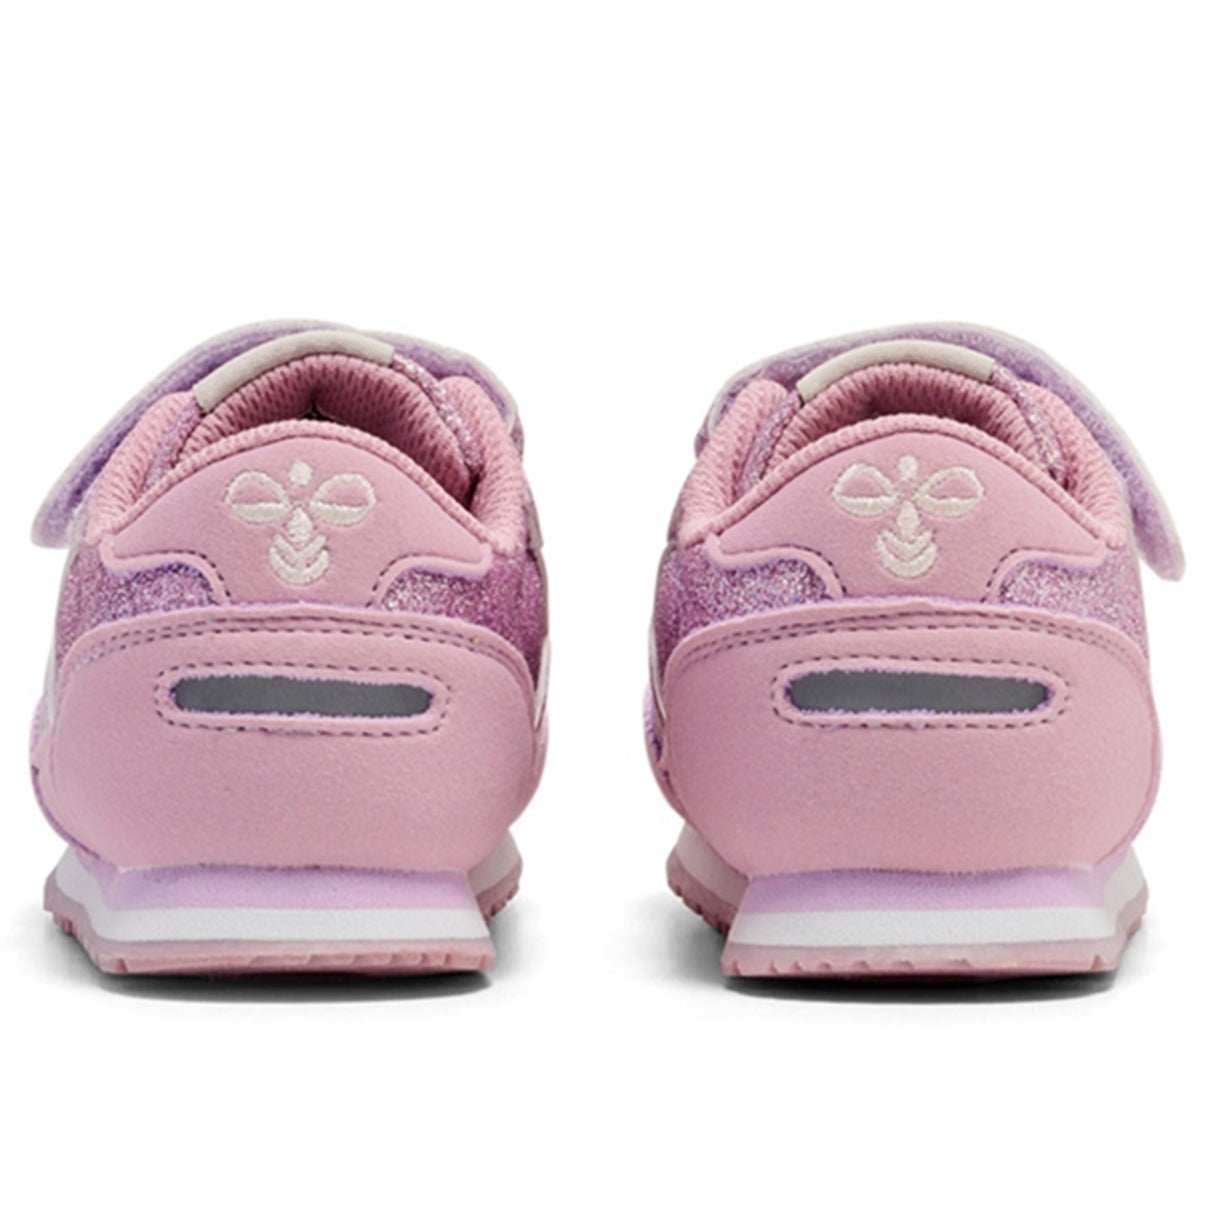 Hummel Reflex Glitter Infant Sneakers Lavender Frost 5